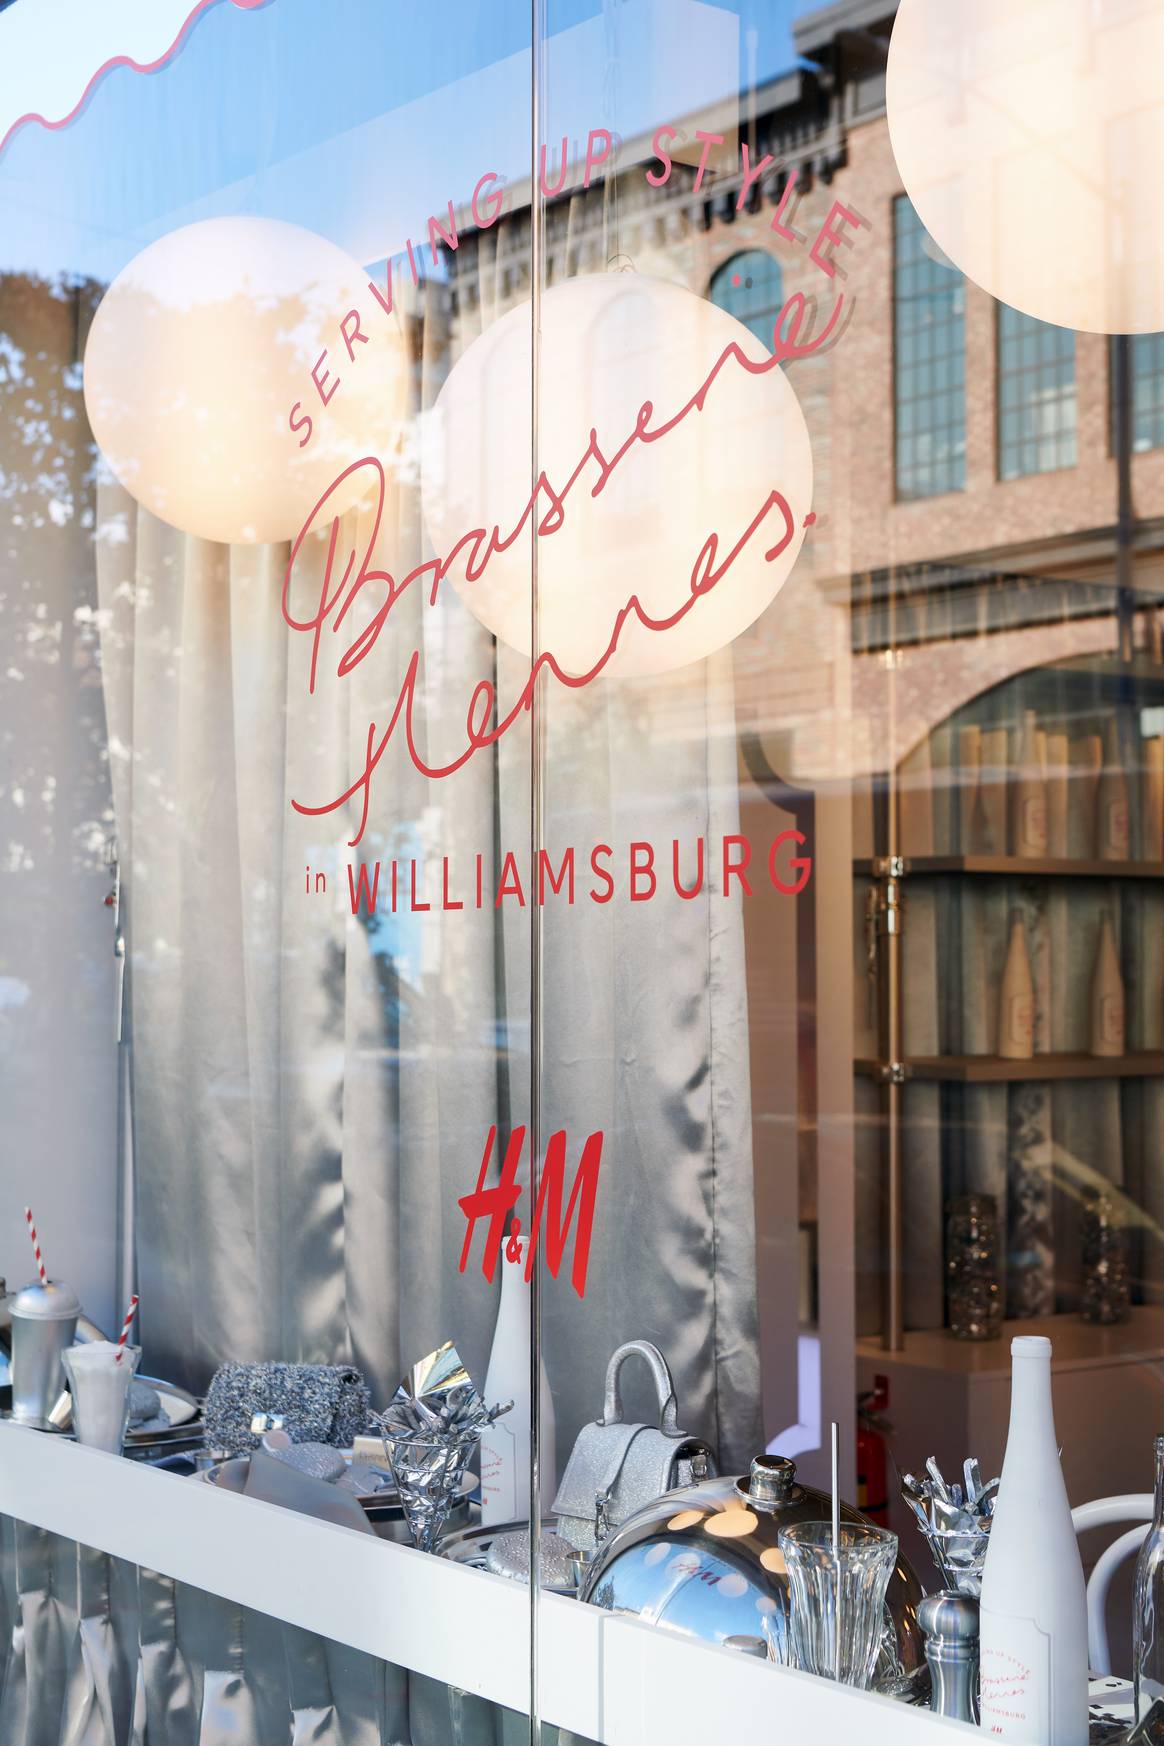 H&M’s new store in Williamsburg, Brooklyn